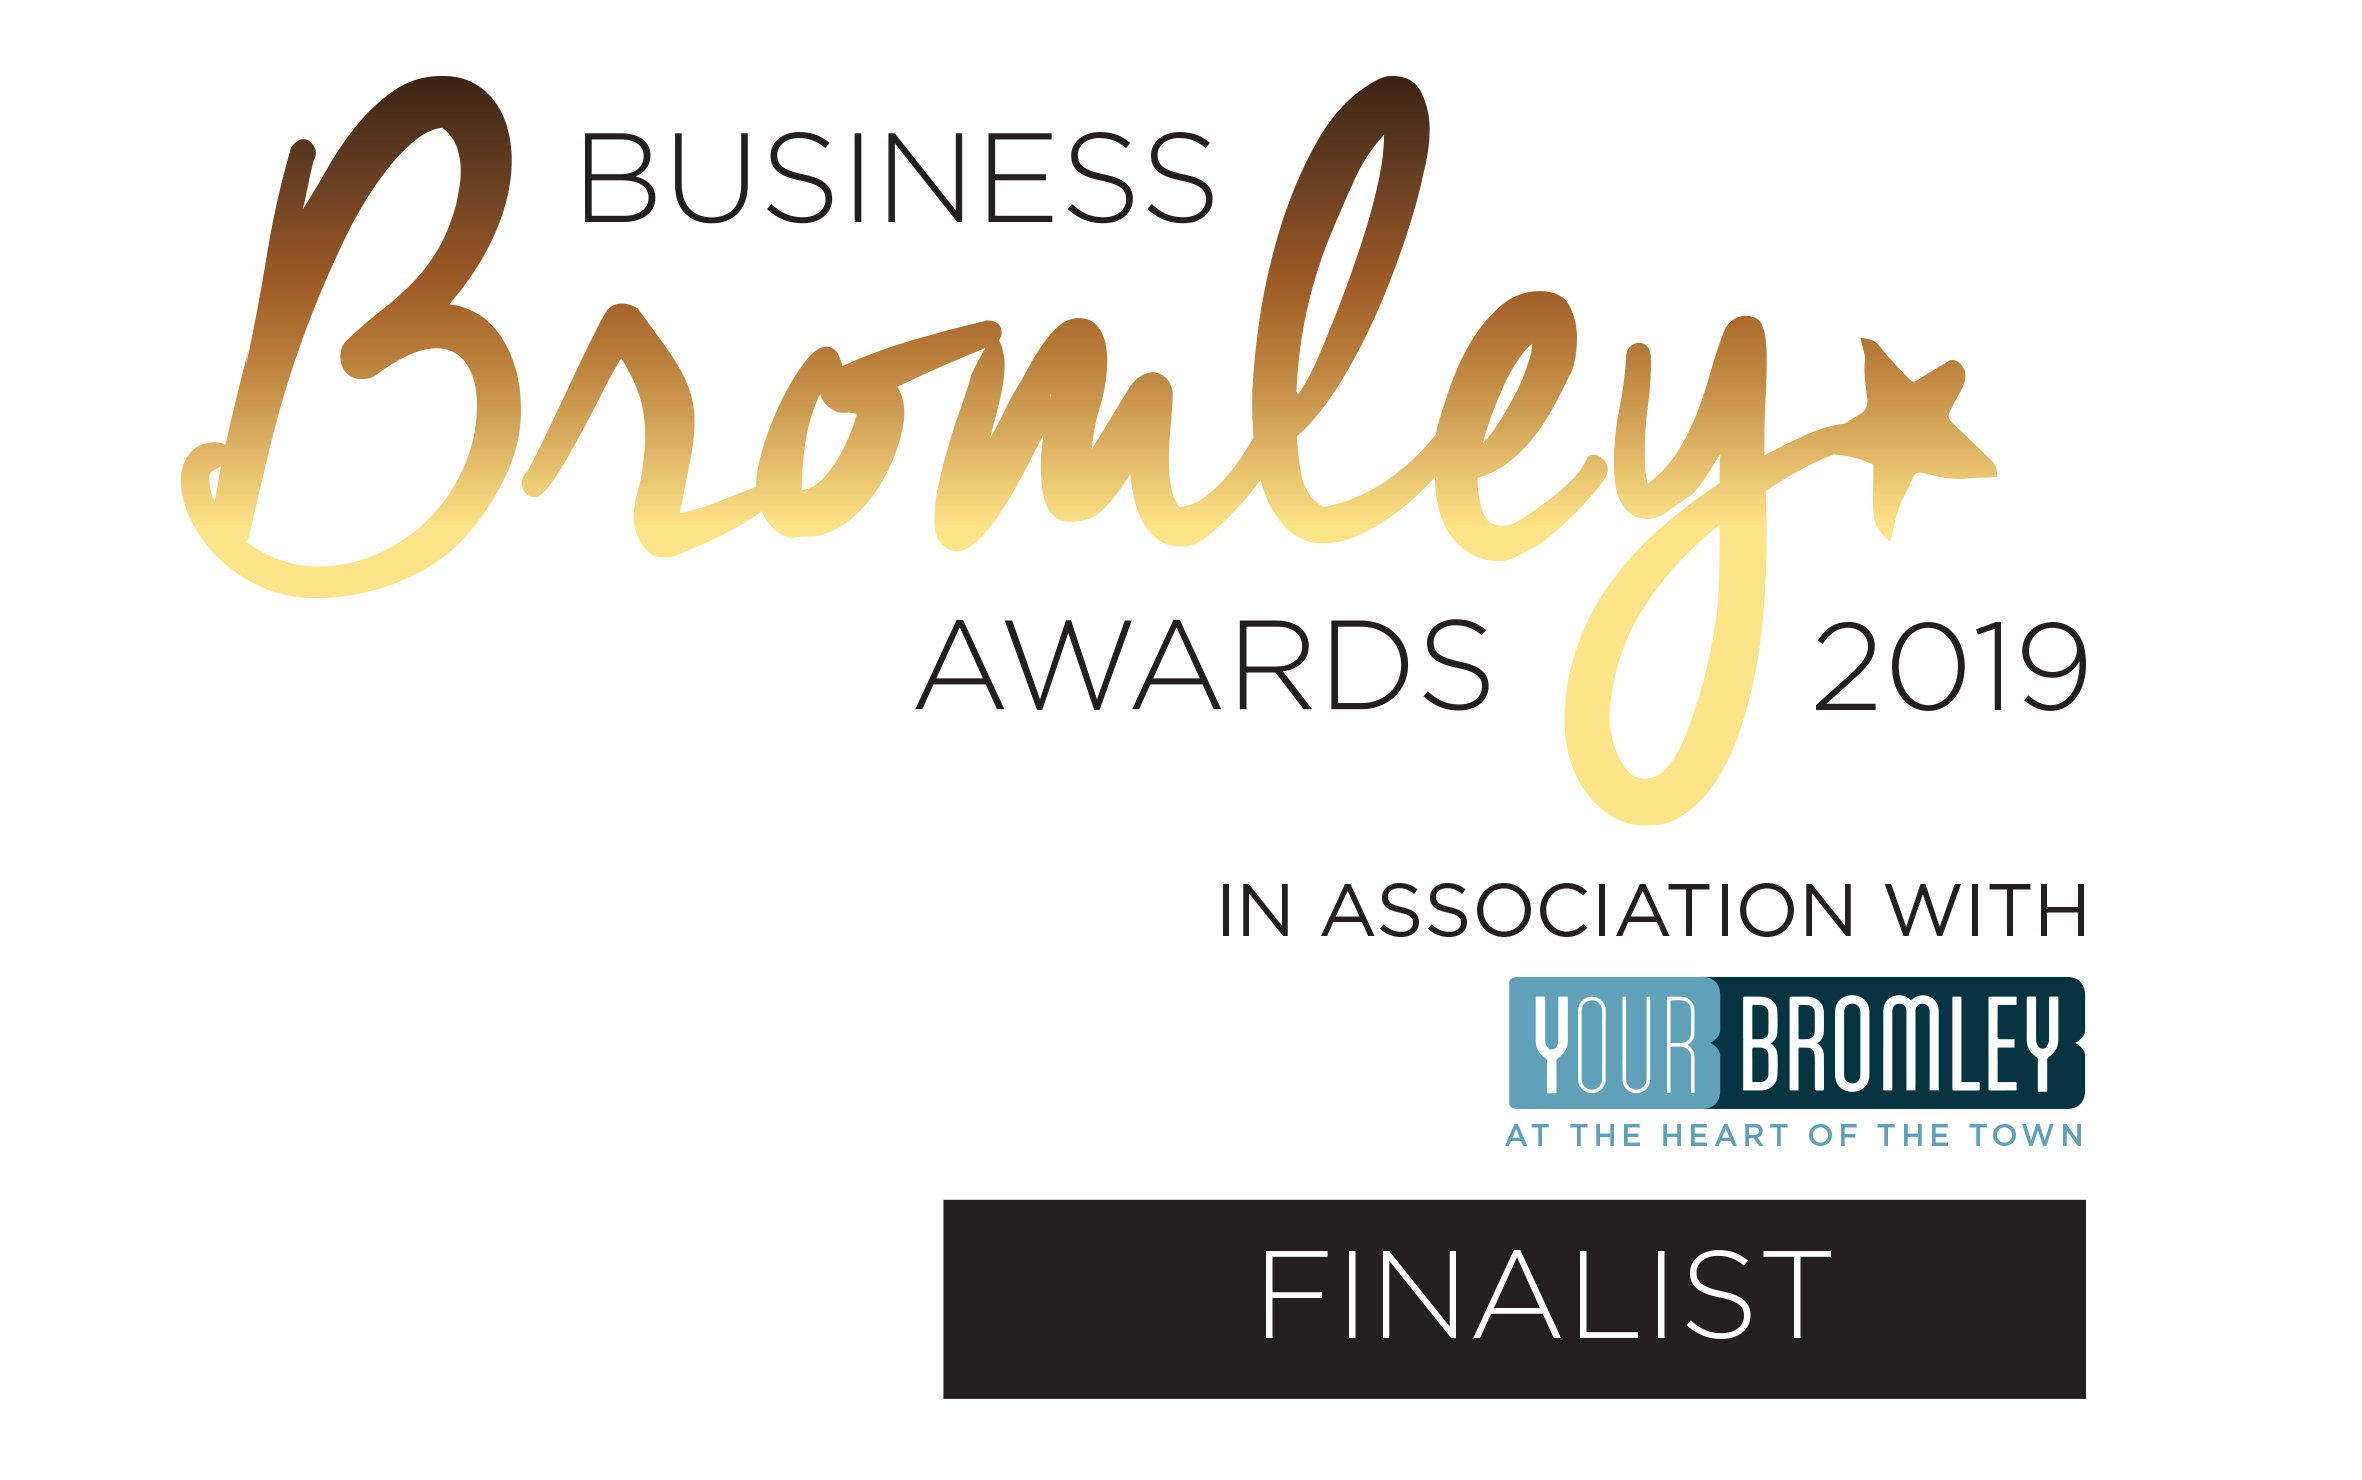 Bromley Business Awards Logo 2019 FINALIST.jpg